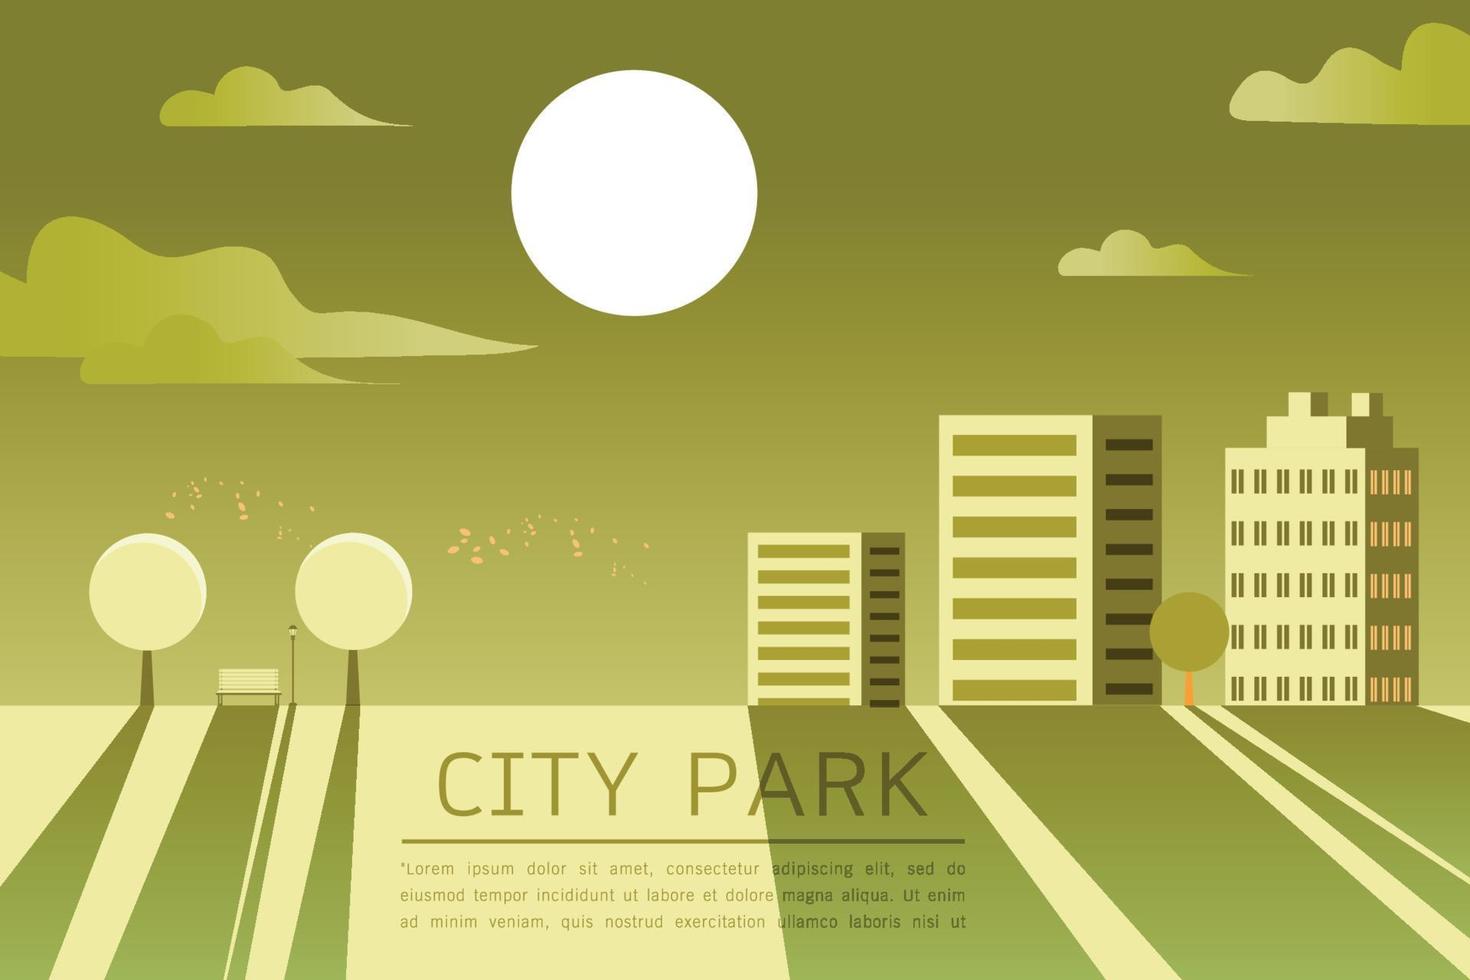 City Park Vector Flat illustration.